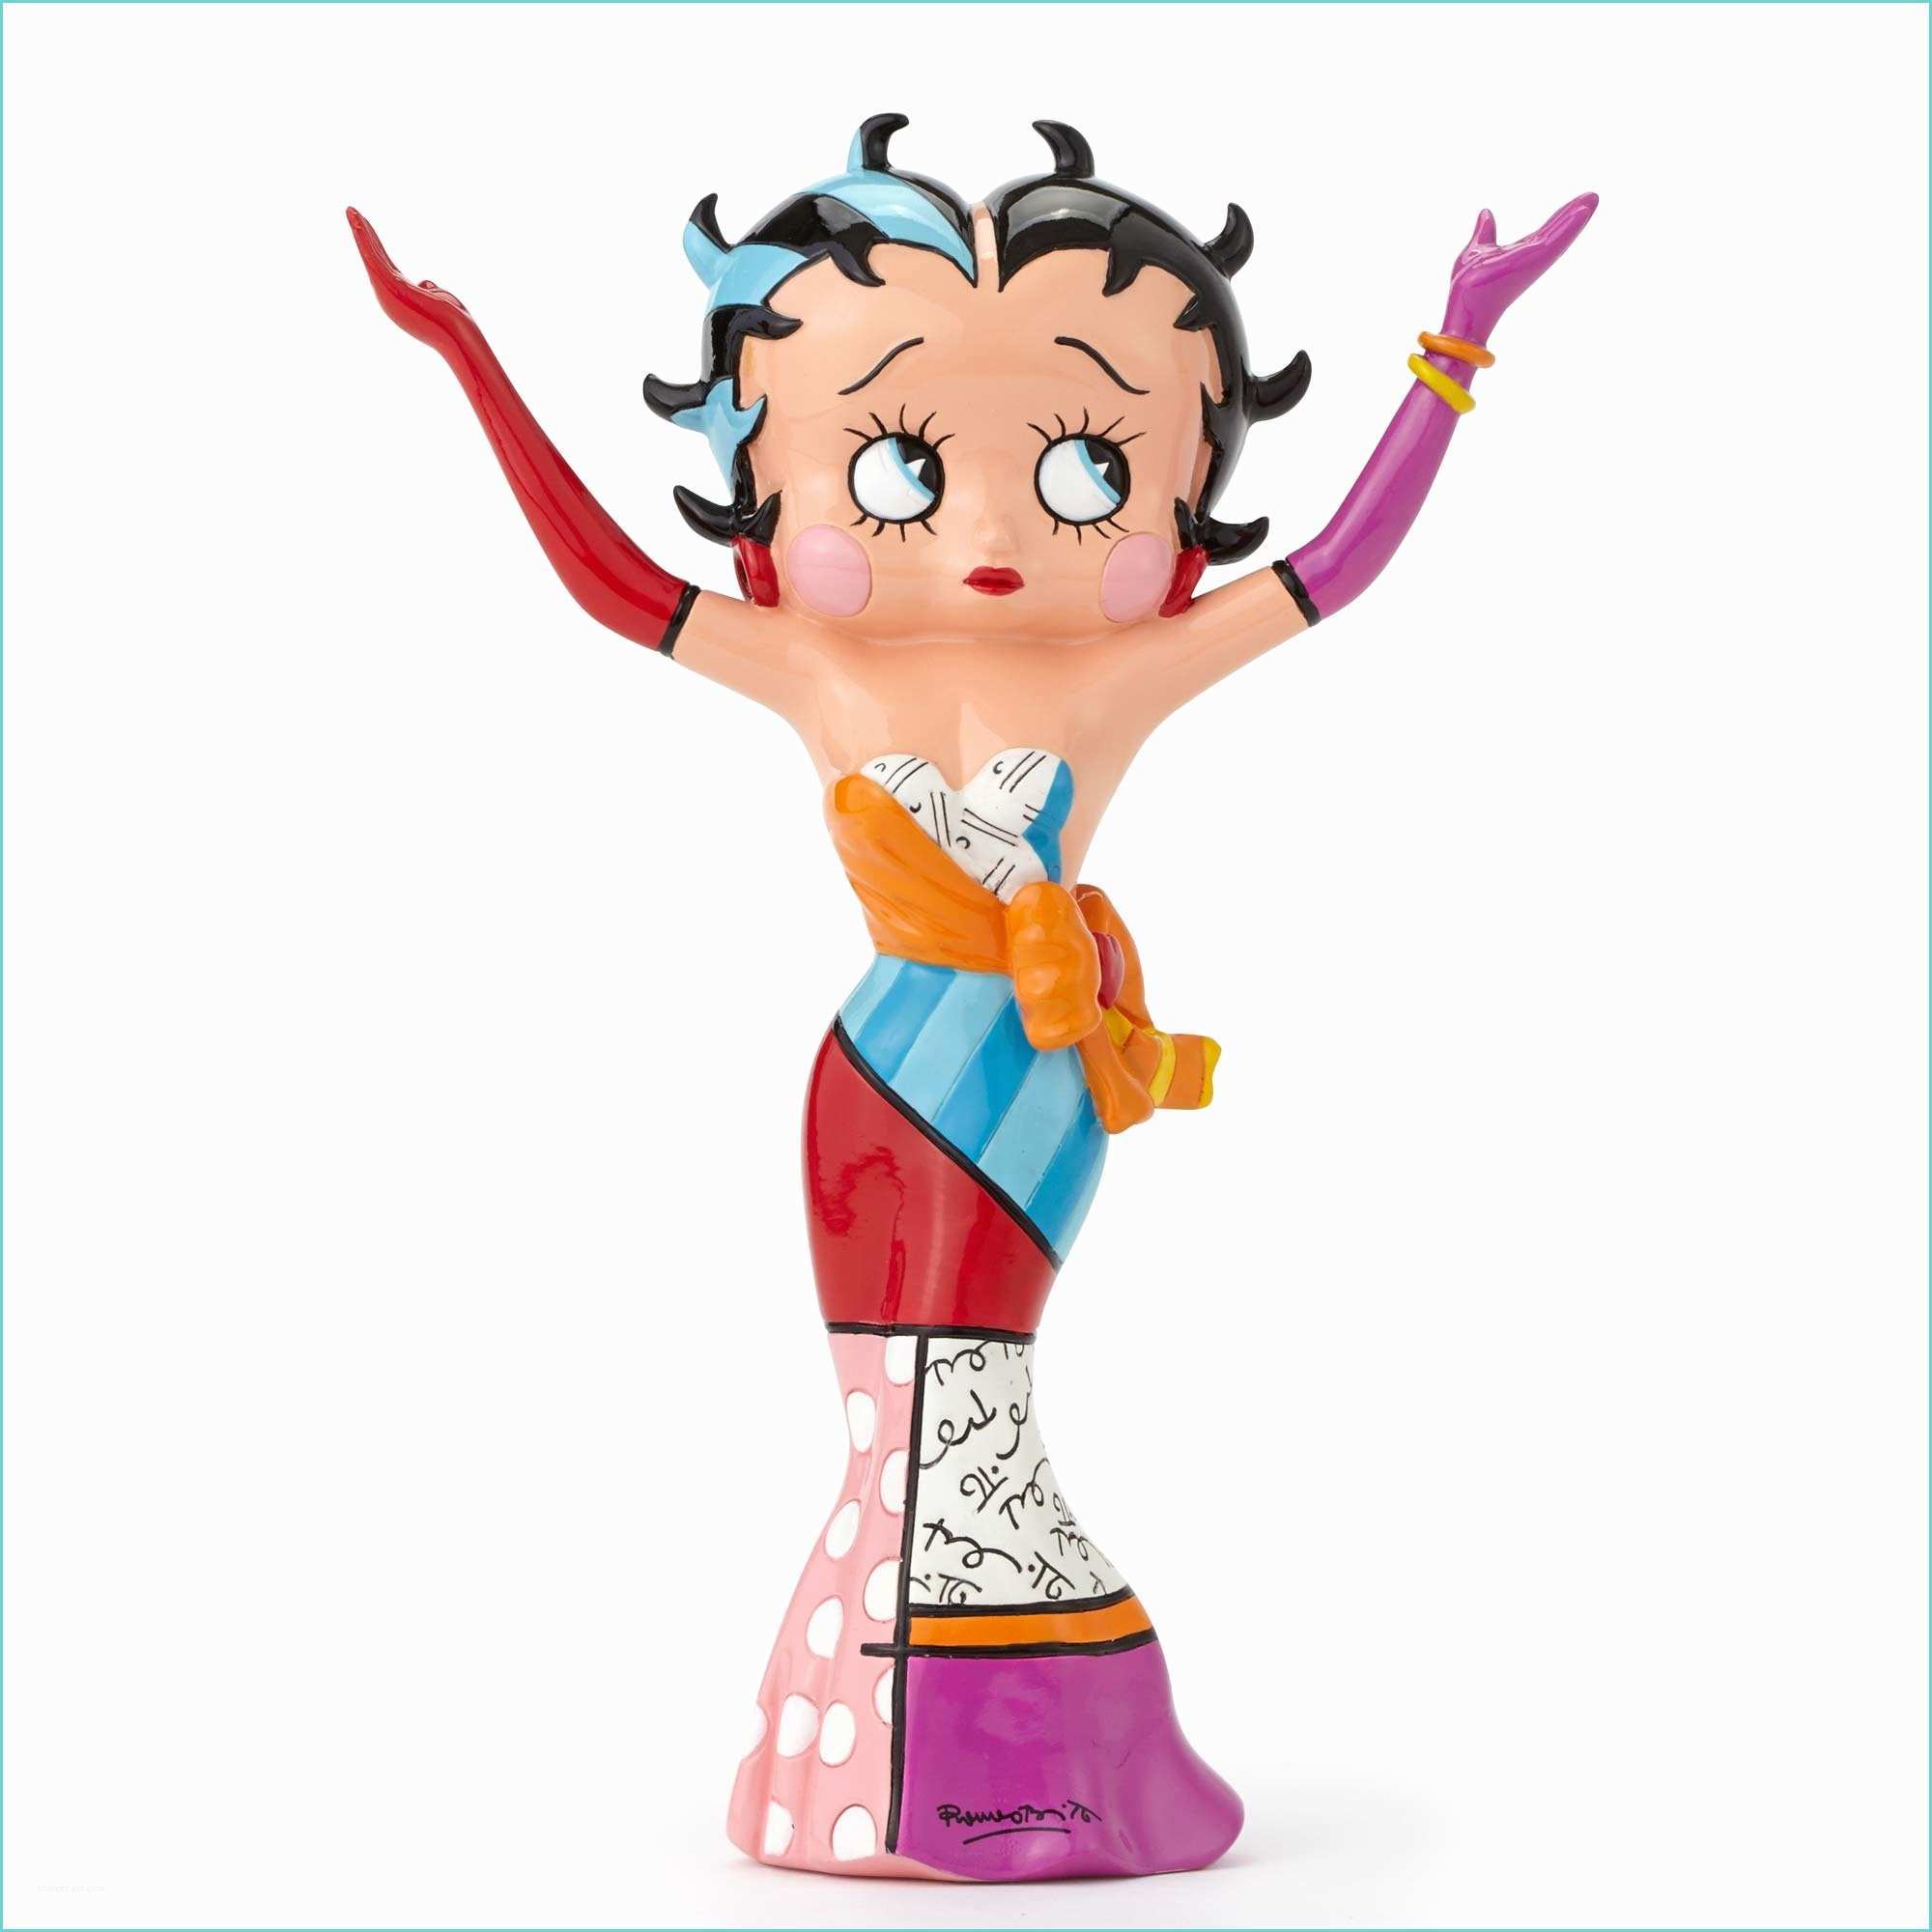 Betty Boop Waitress 3ft Disney Figurines by Romero Britto